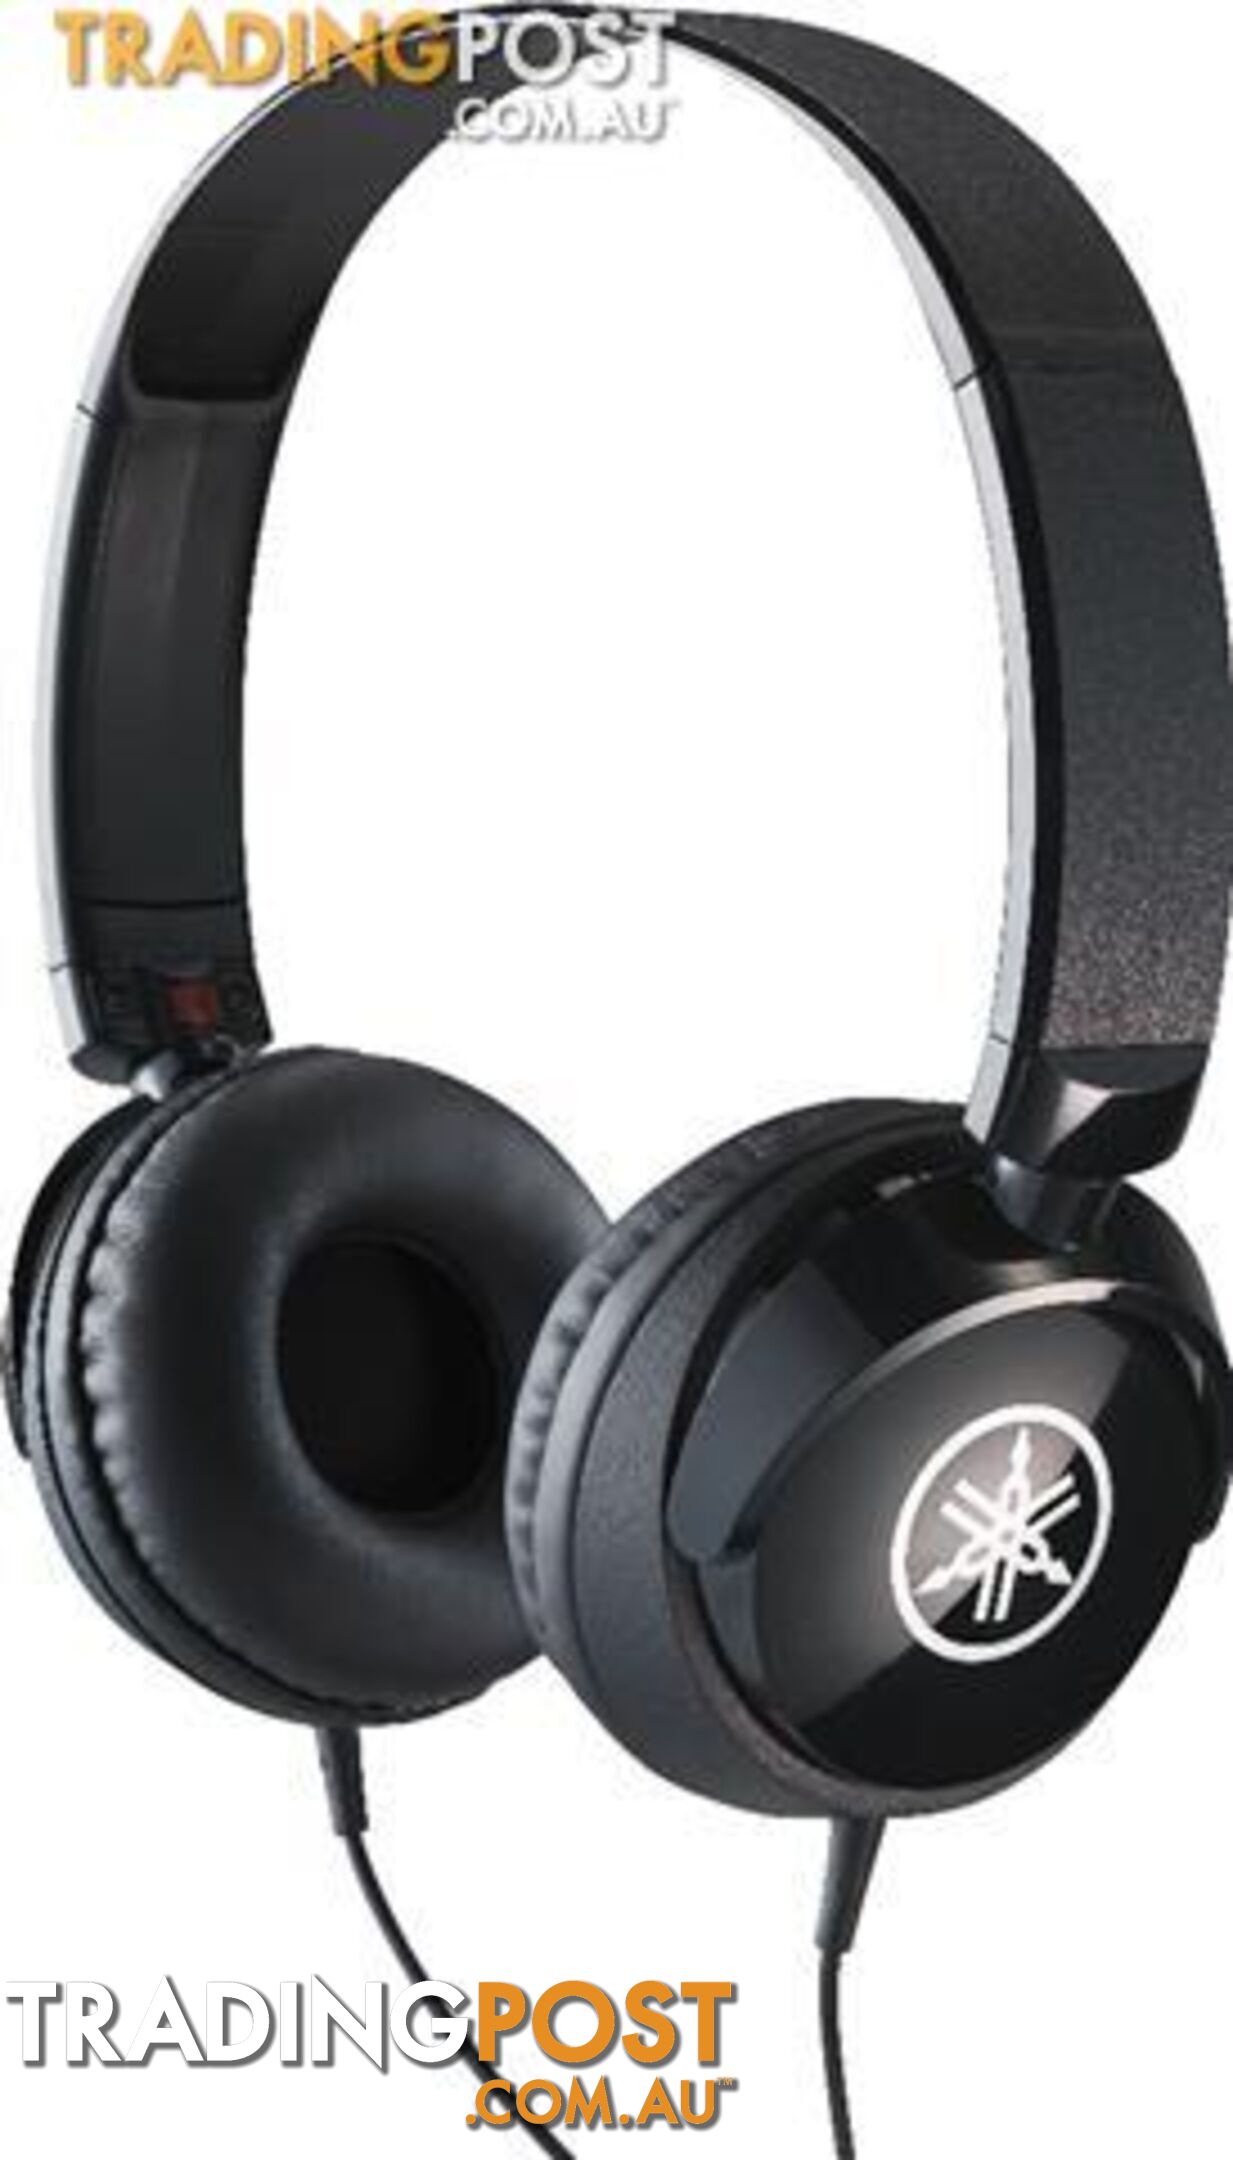 1. Yamaha HPH-50 Simple compact headphones